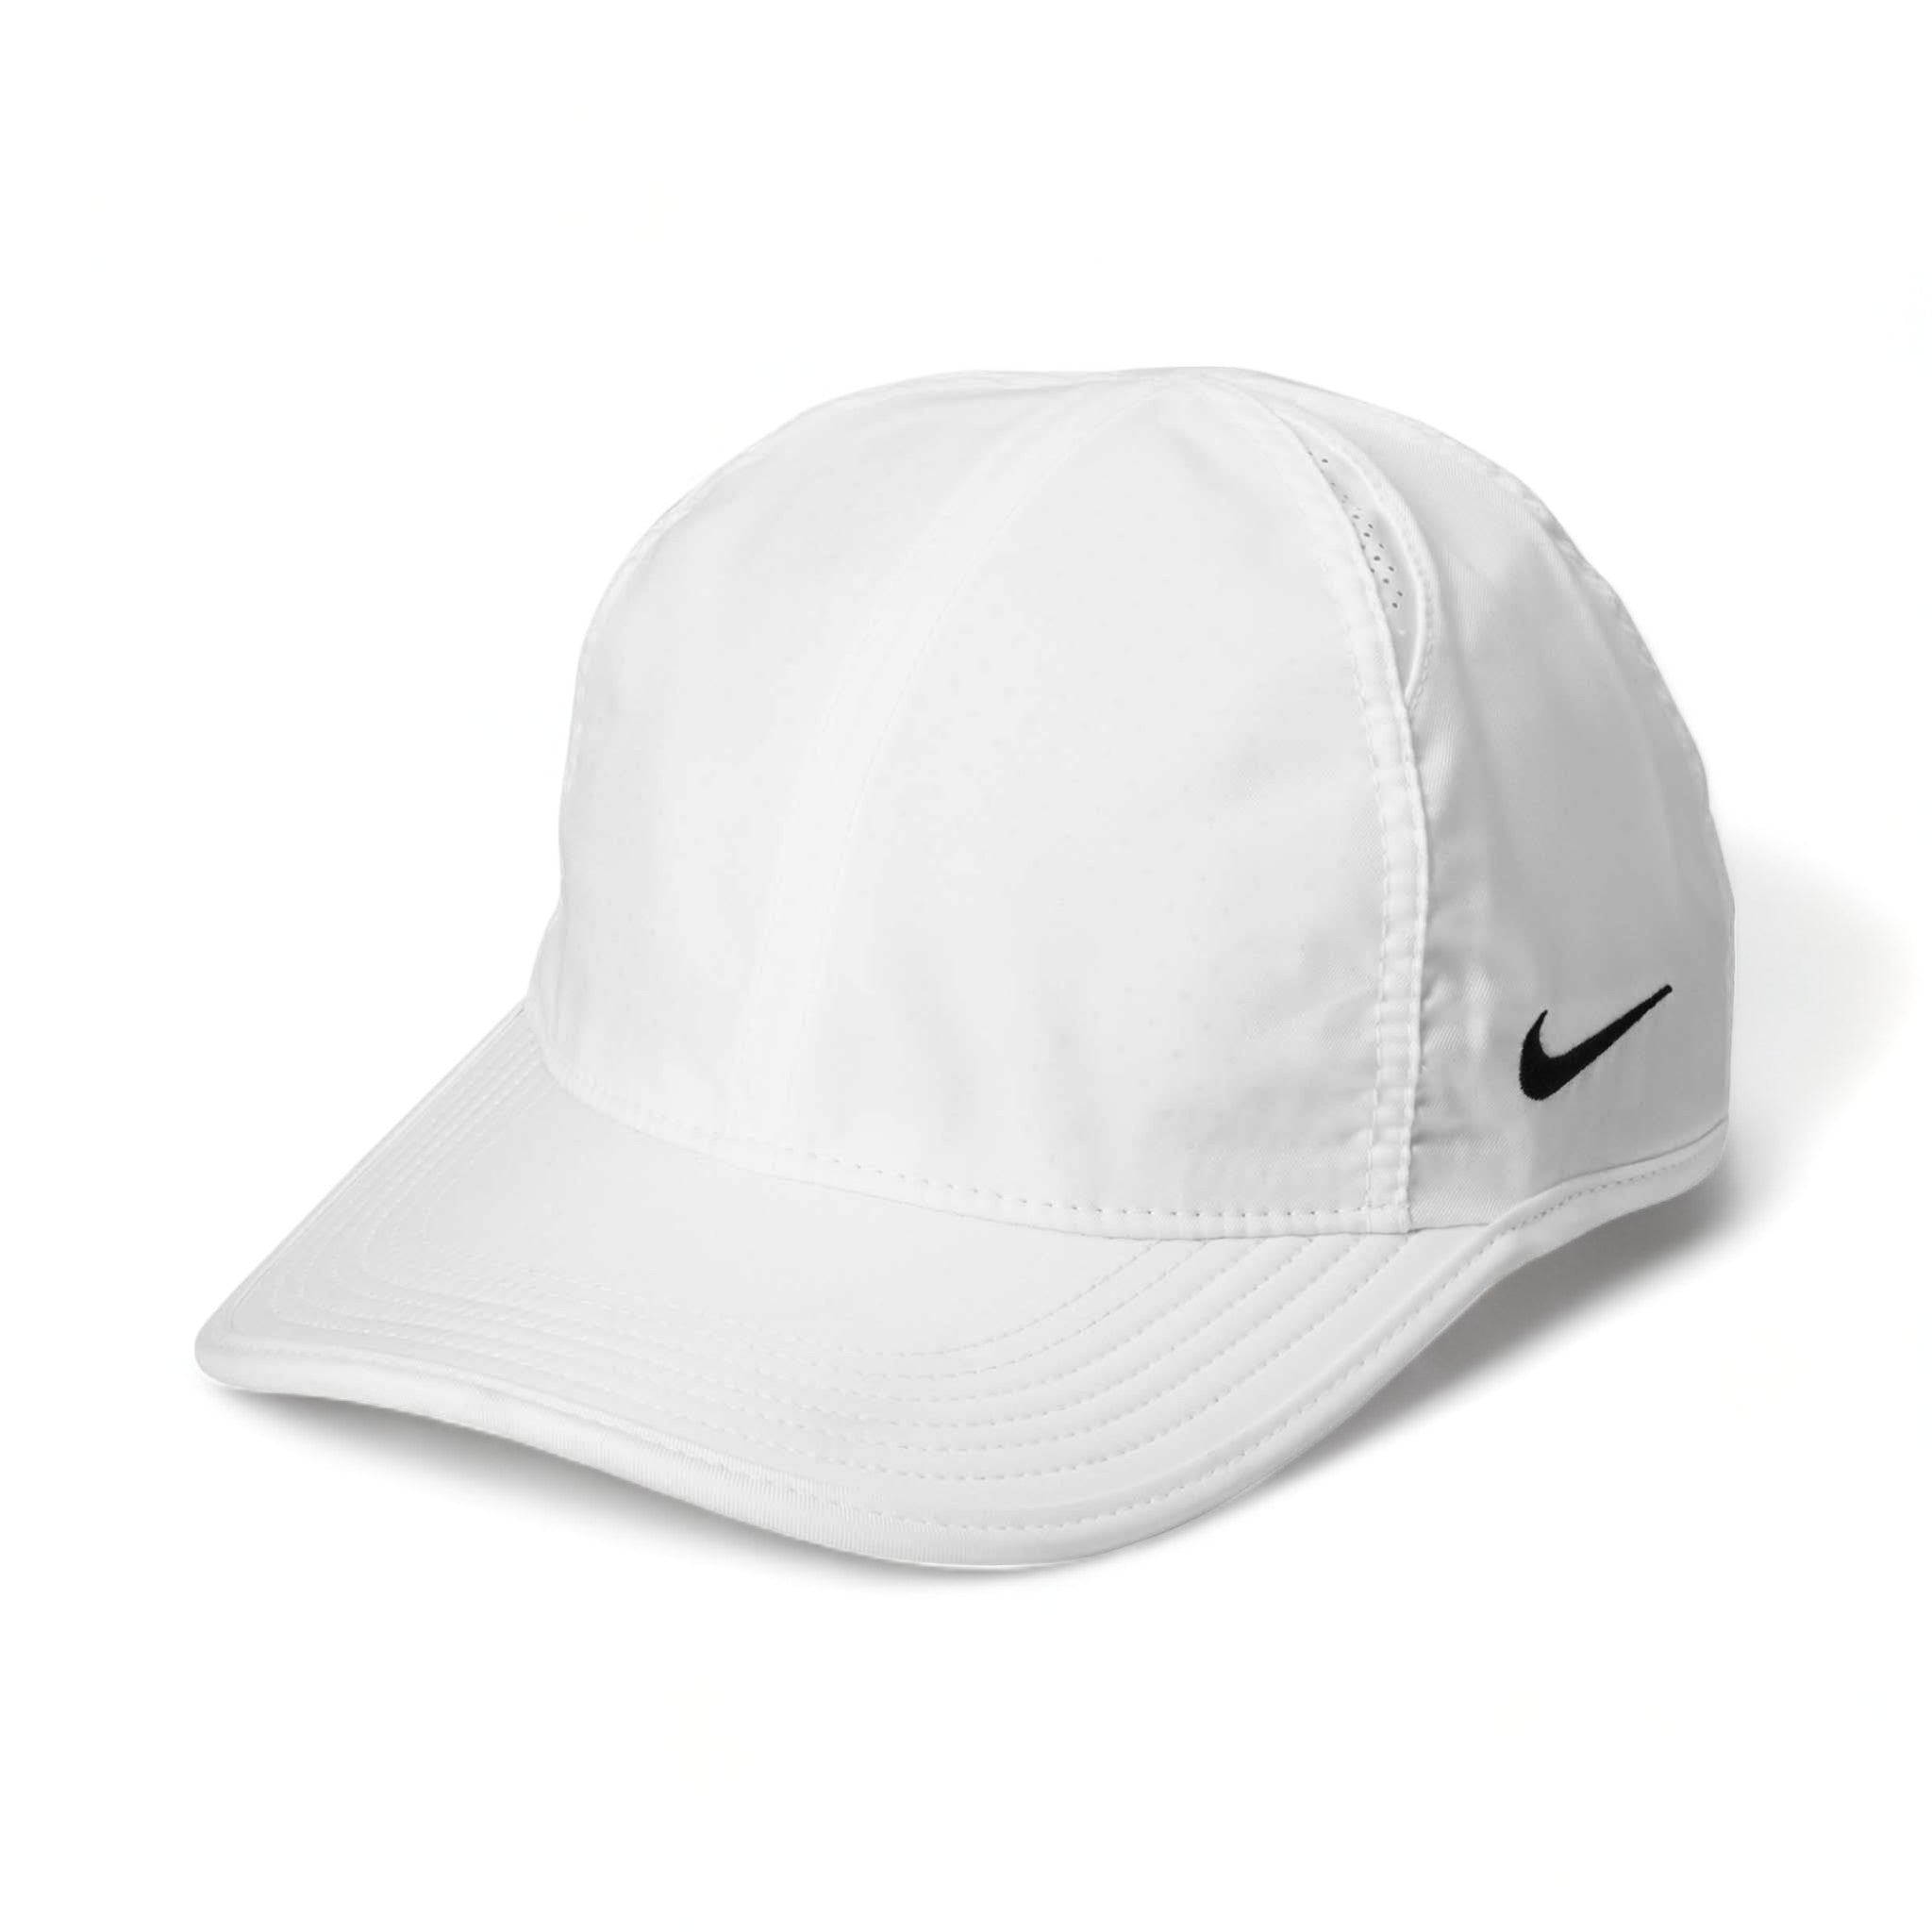 Side view of Nike NKFB5666 custom hat in white